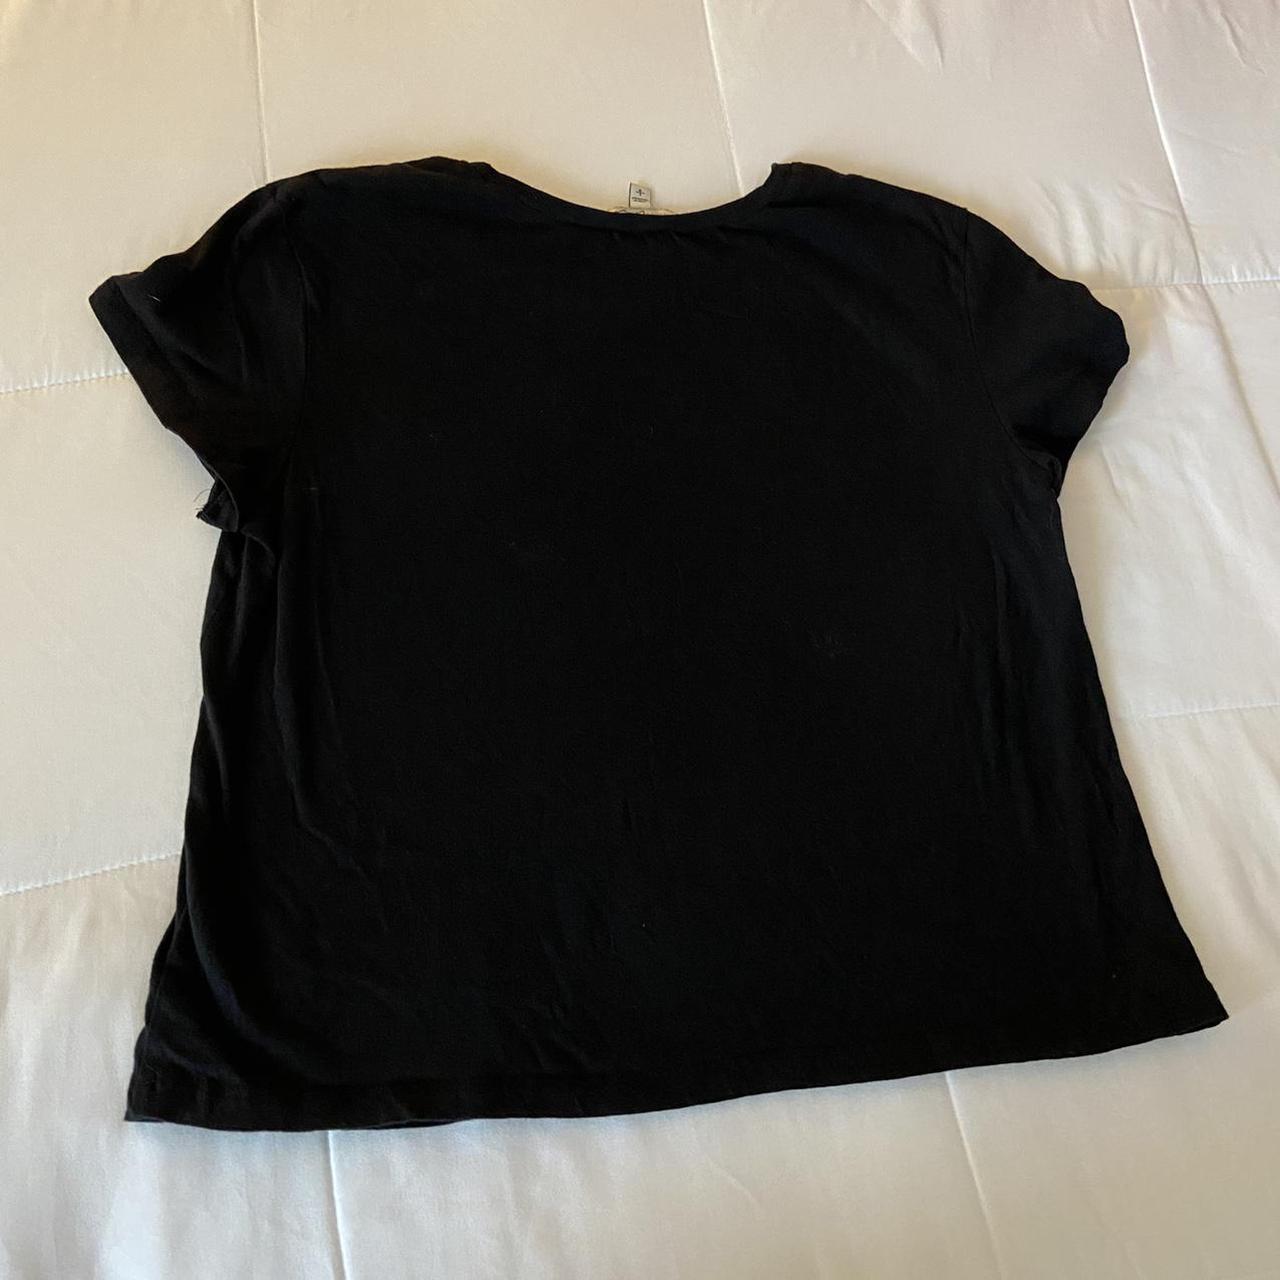 Product Image 3 - Black New York Tee Shirt

Size